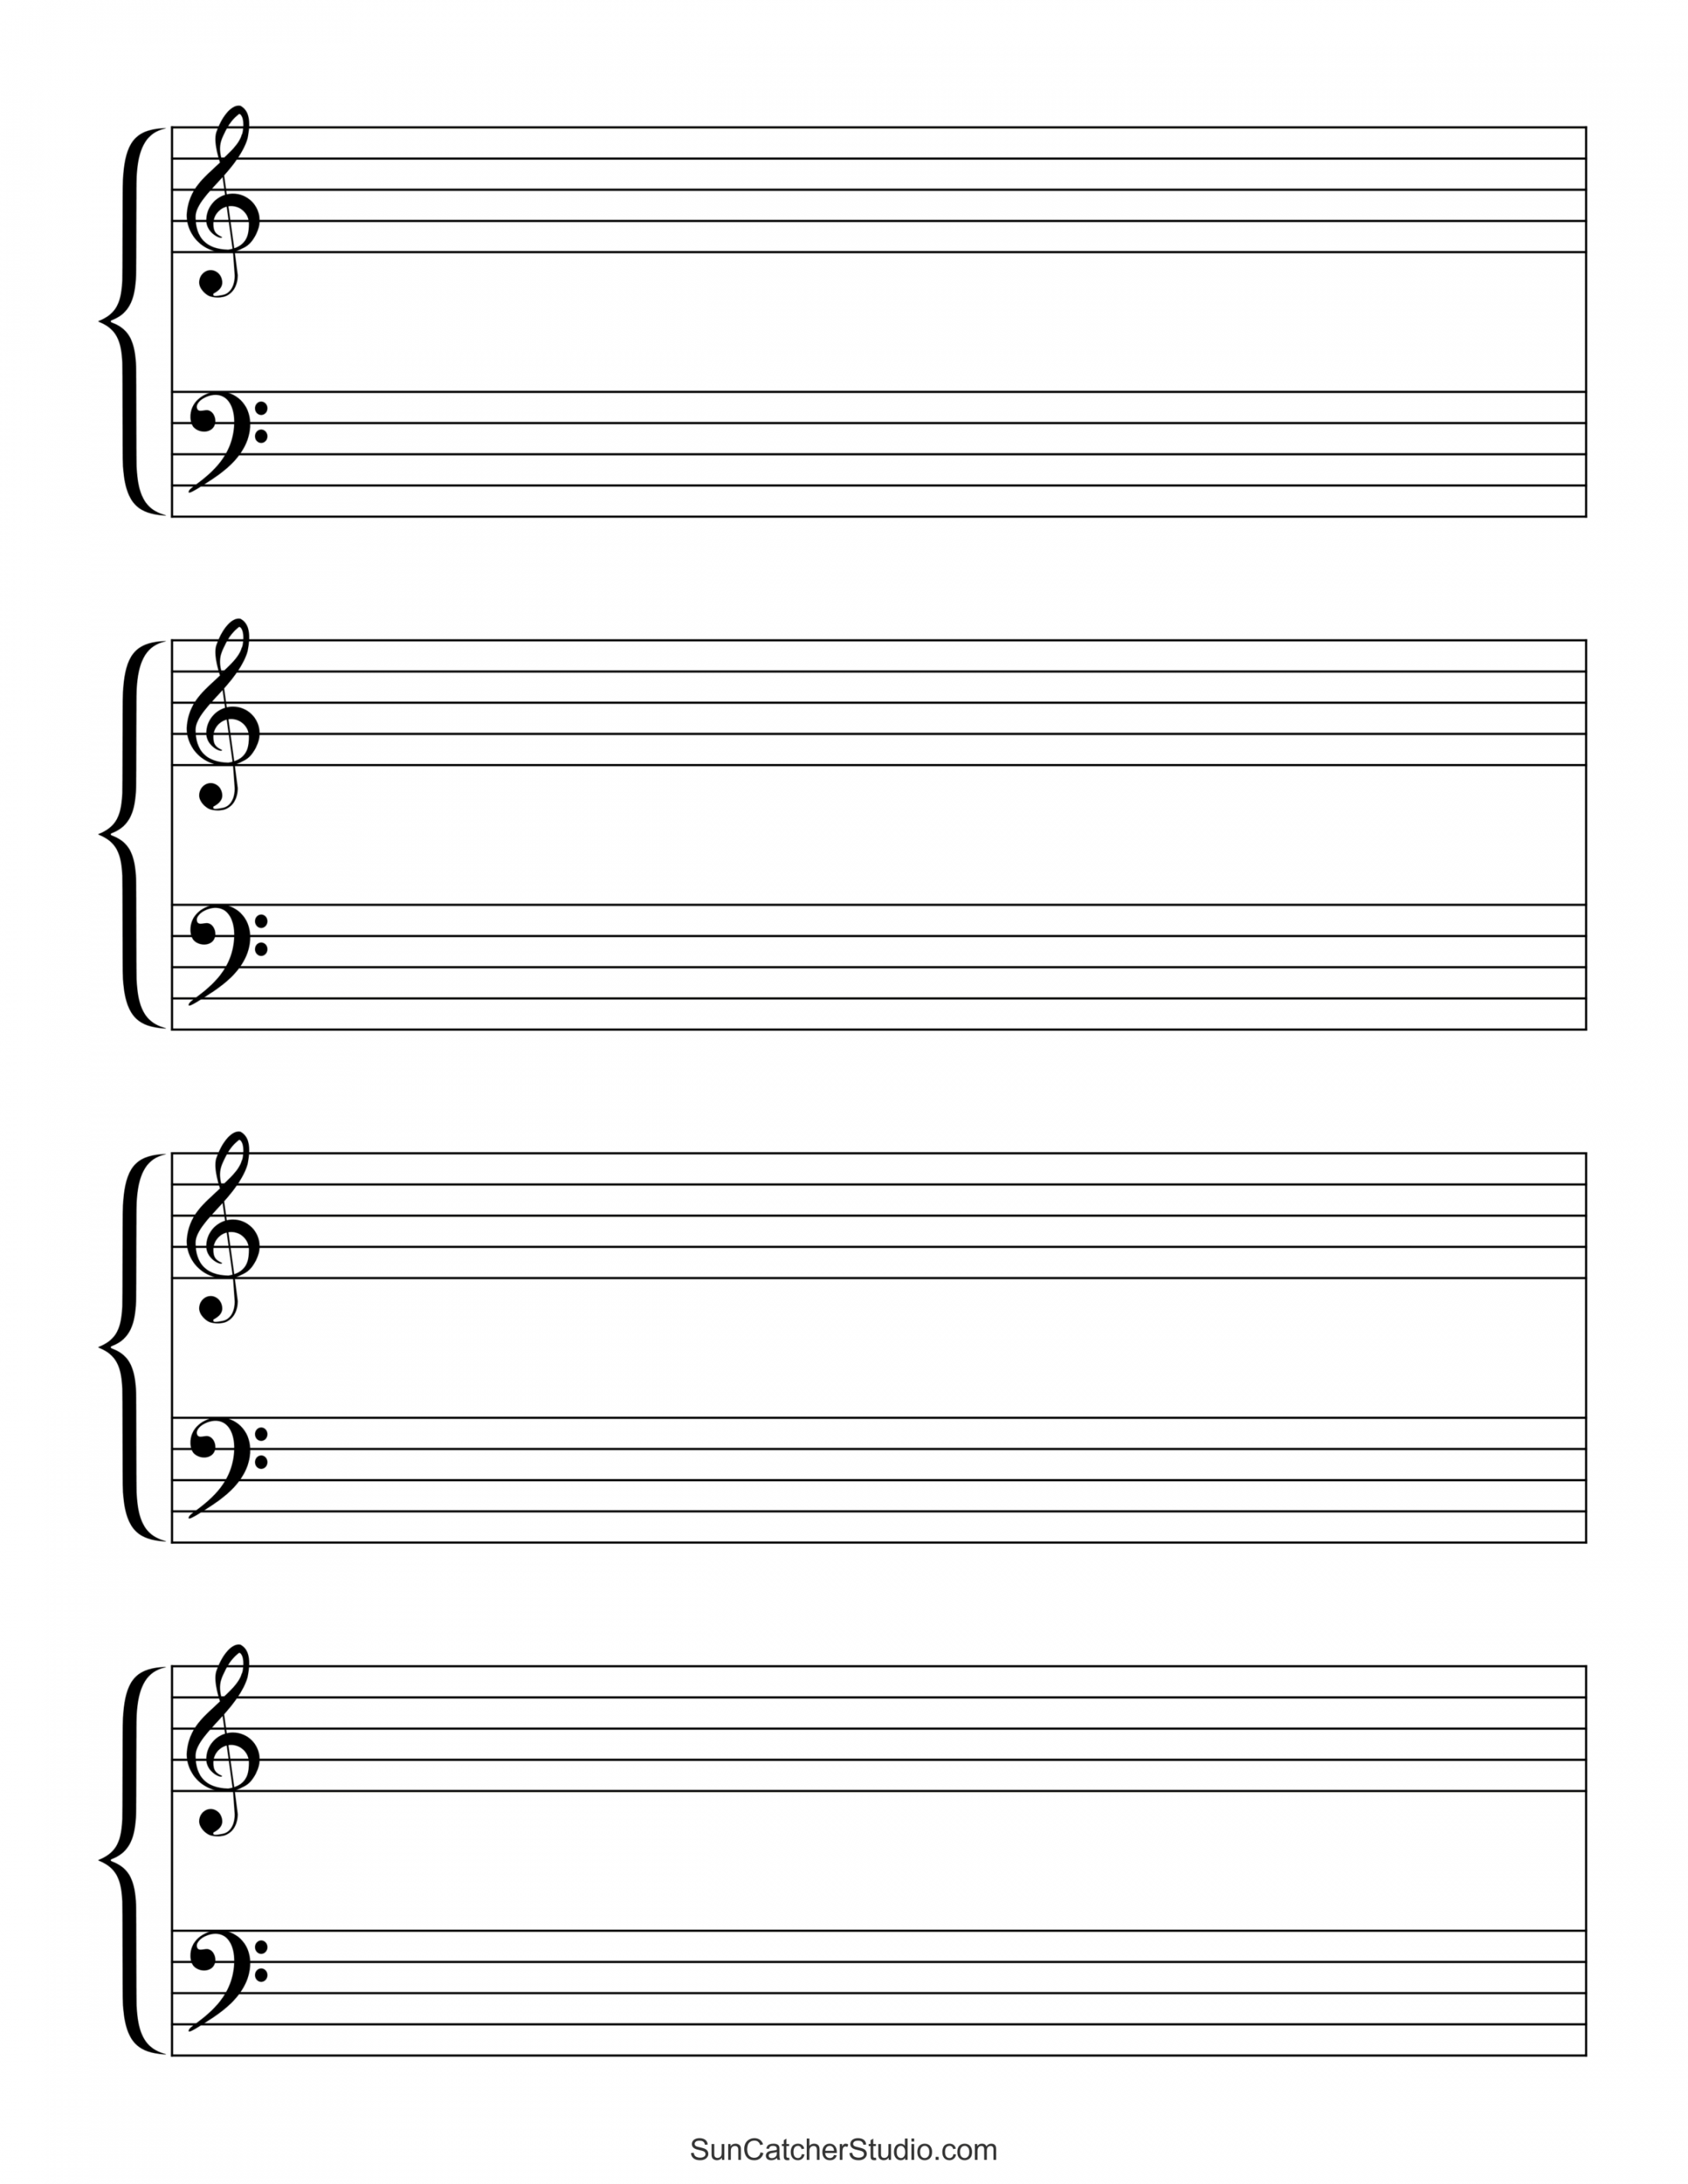 Free Blank Printable Sheet Music - Printable - Blank Sheet Music (Free Printable Staff Paper) – DIY Projects